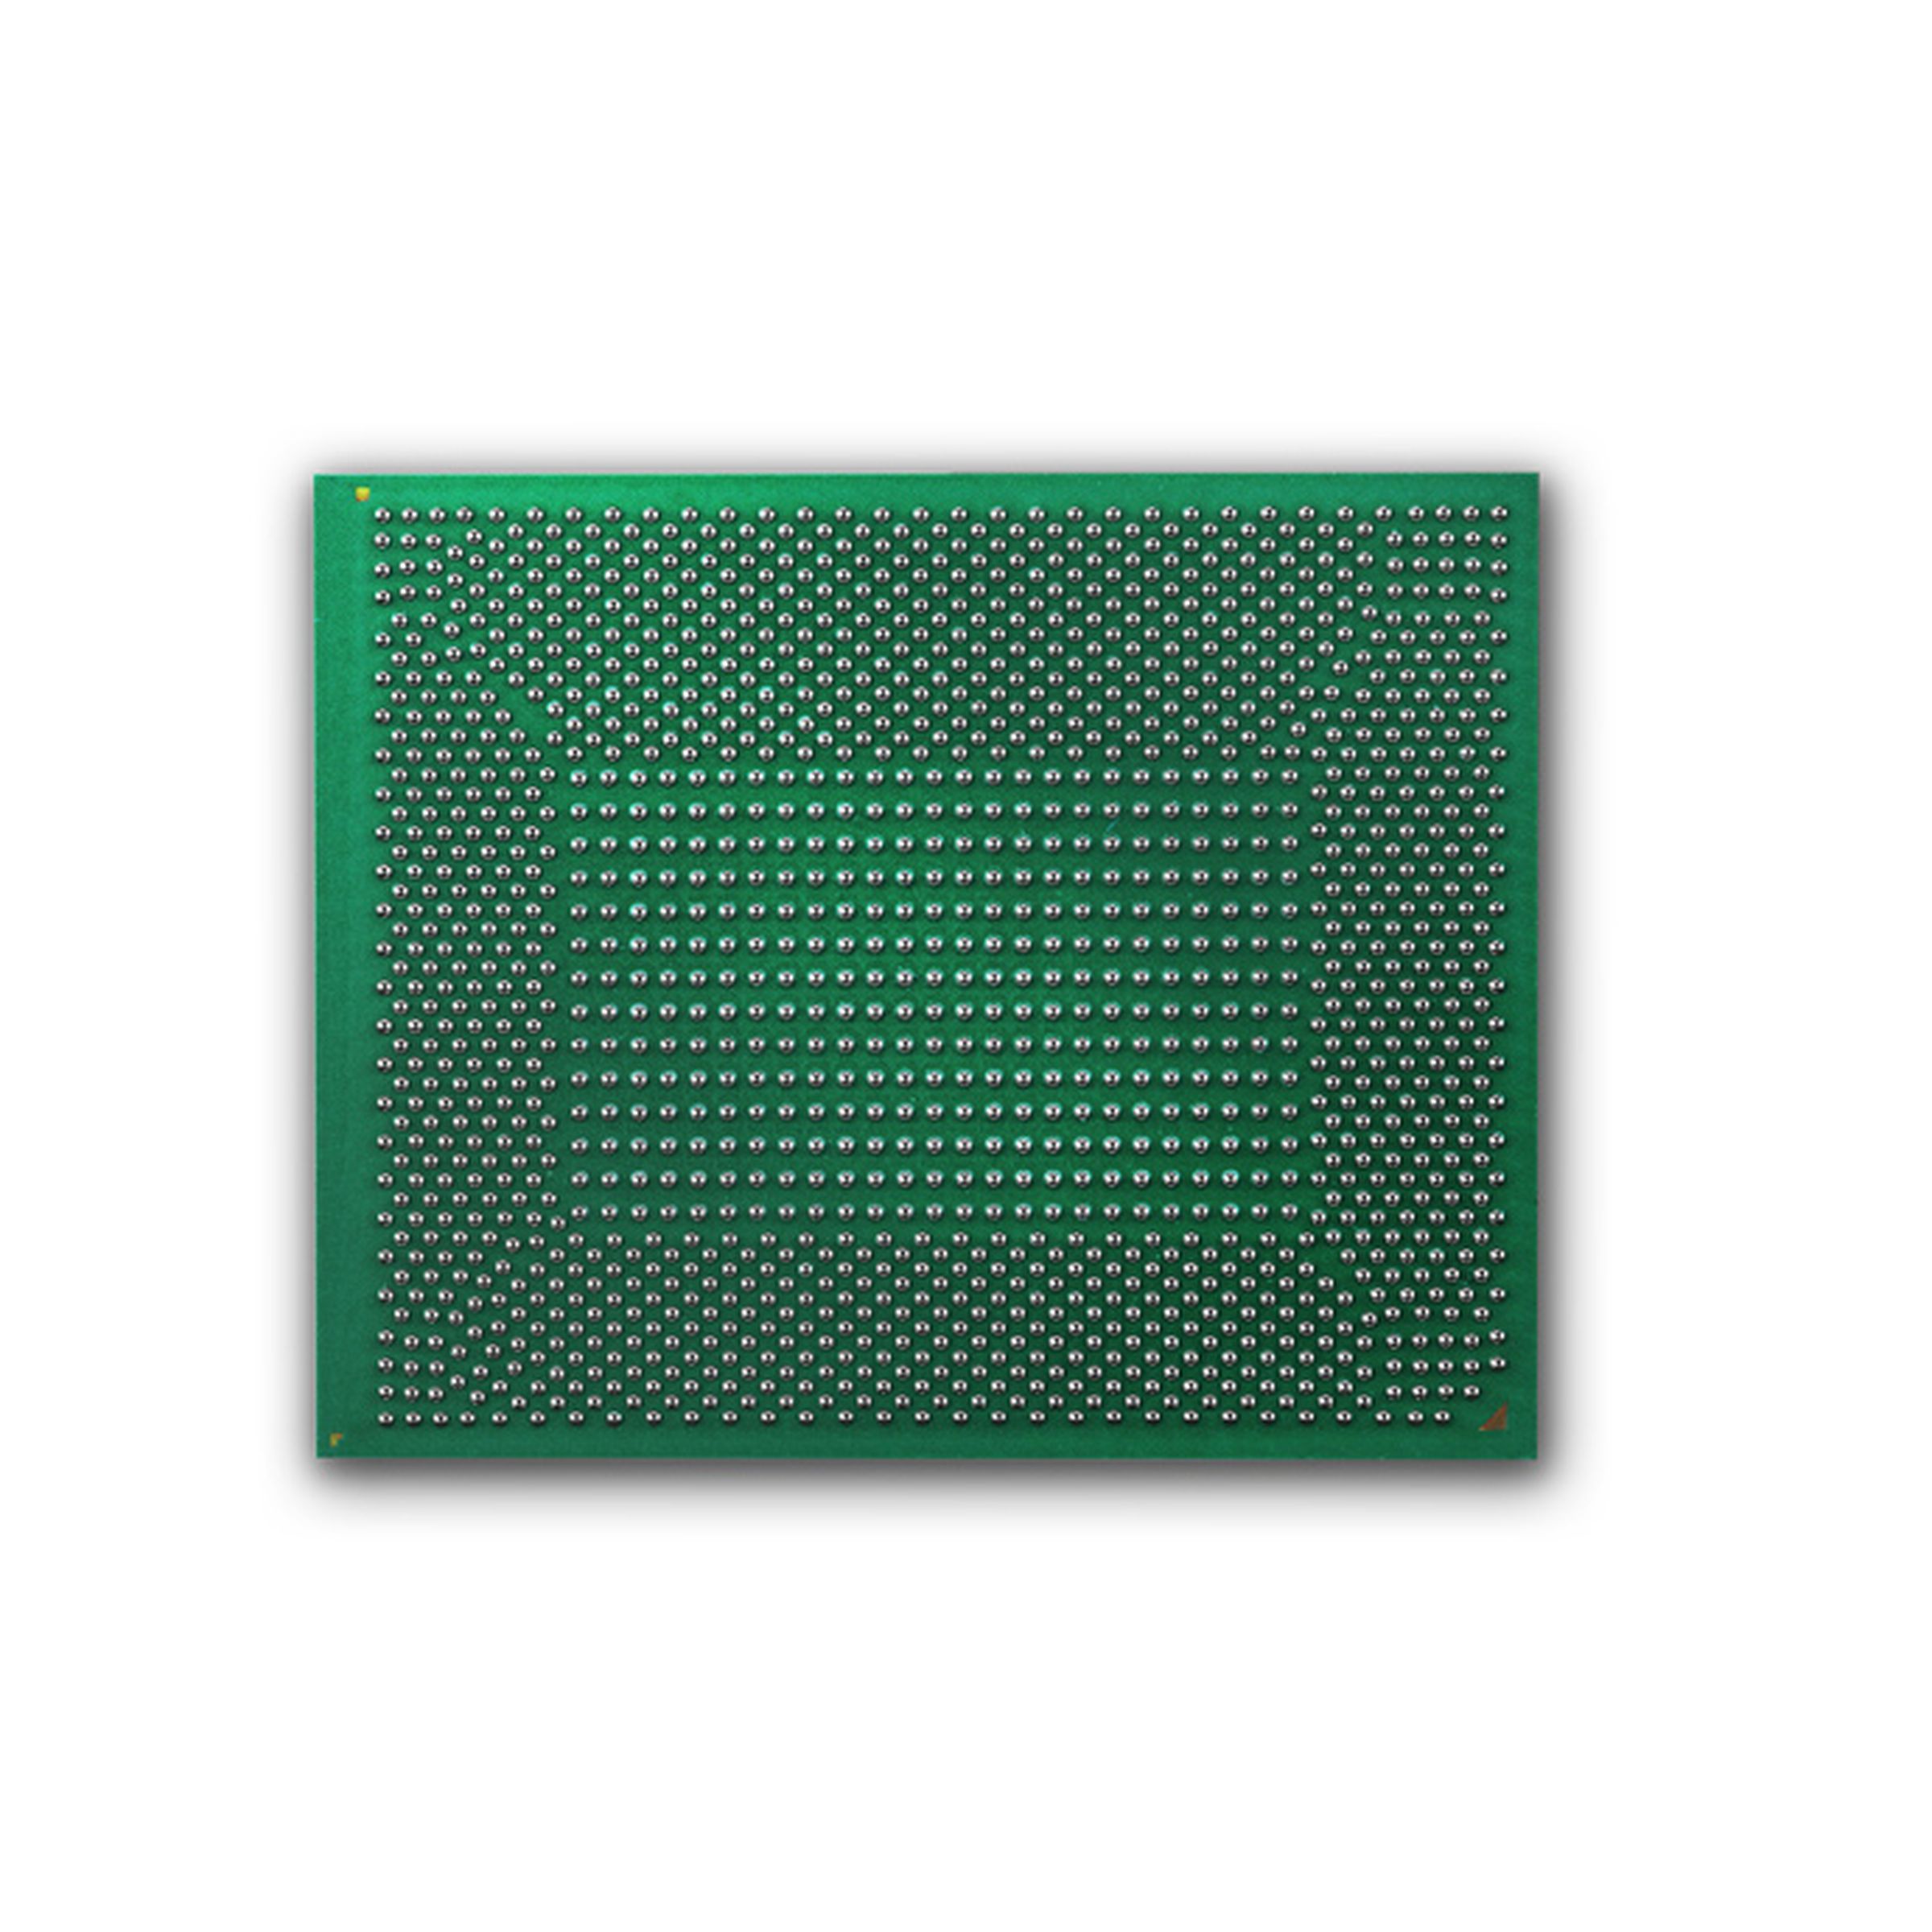 Intel Kaby Lake processor back